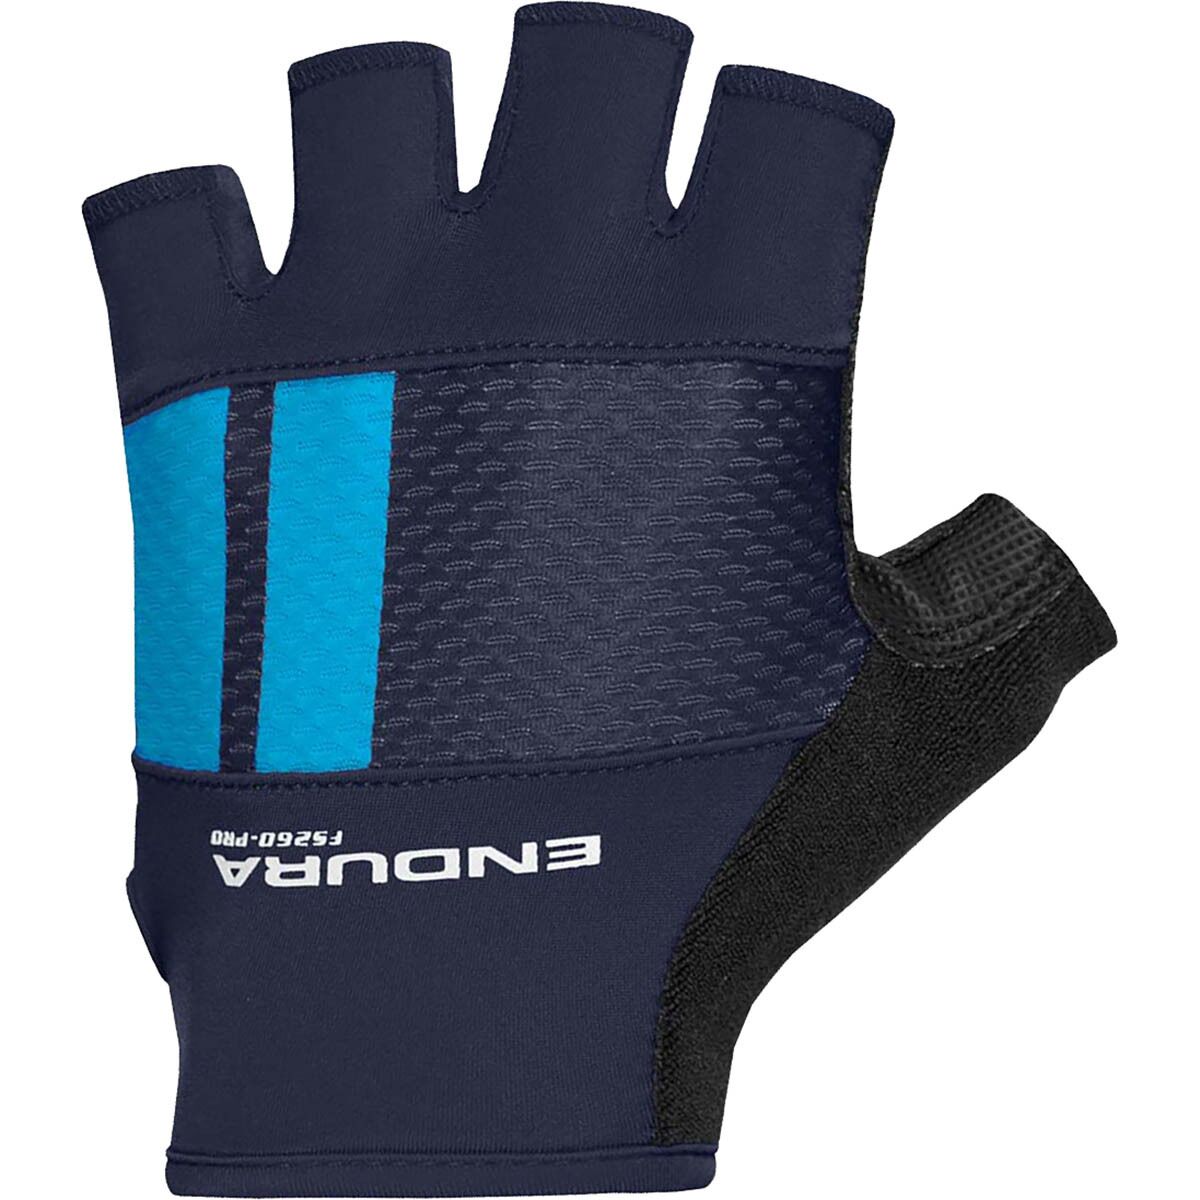 Endura FS260-Pro Aerogel Glove - Men's